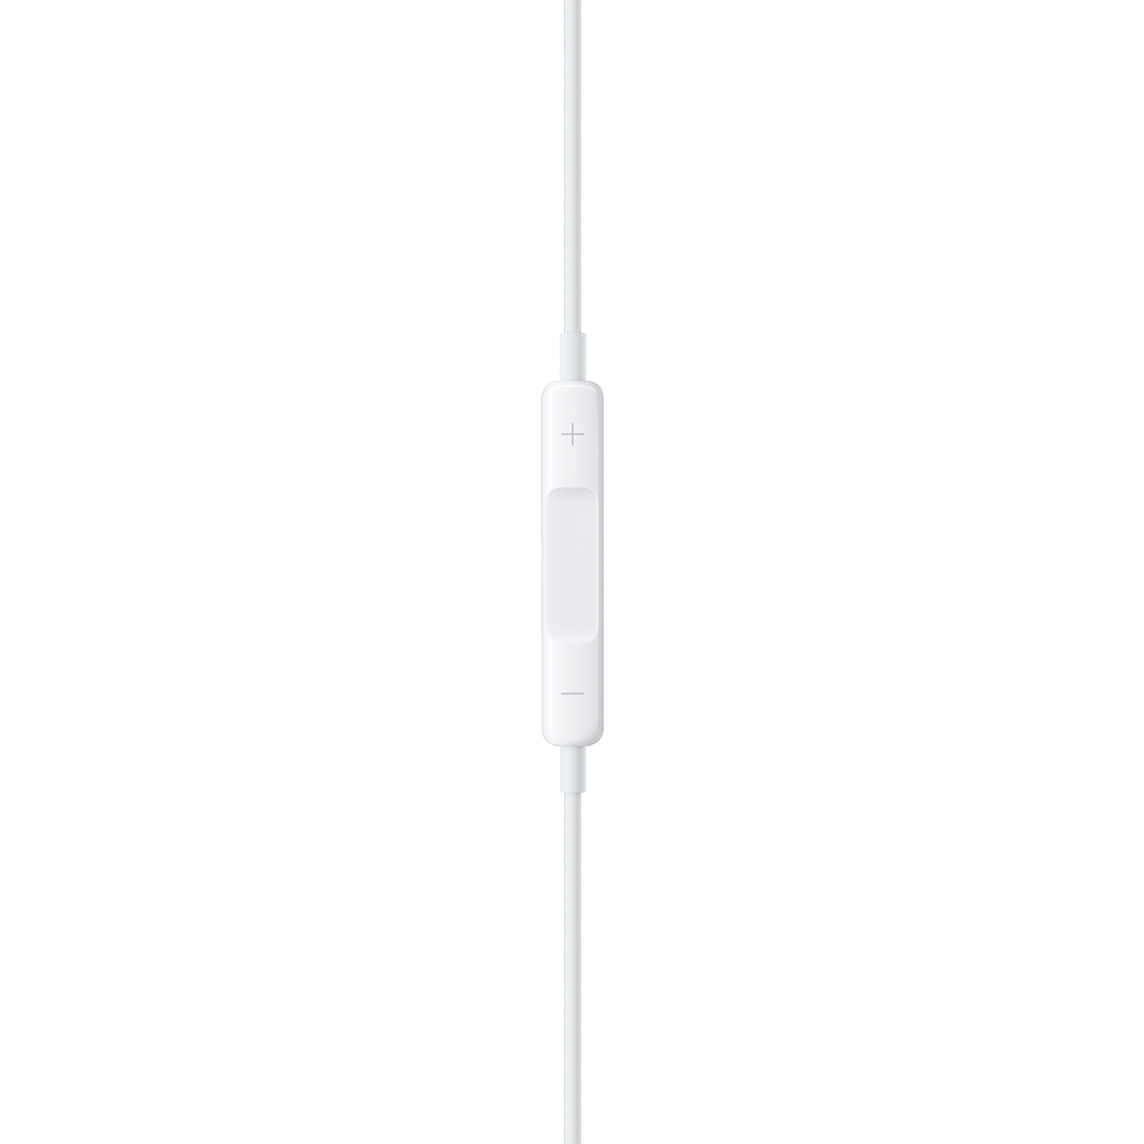  - Audífonos Apple Earpods con conector Lightning 6